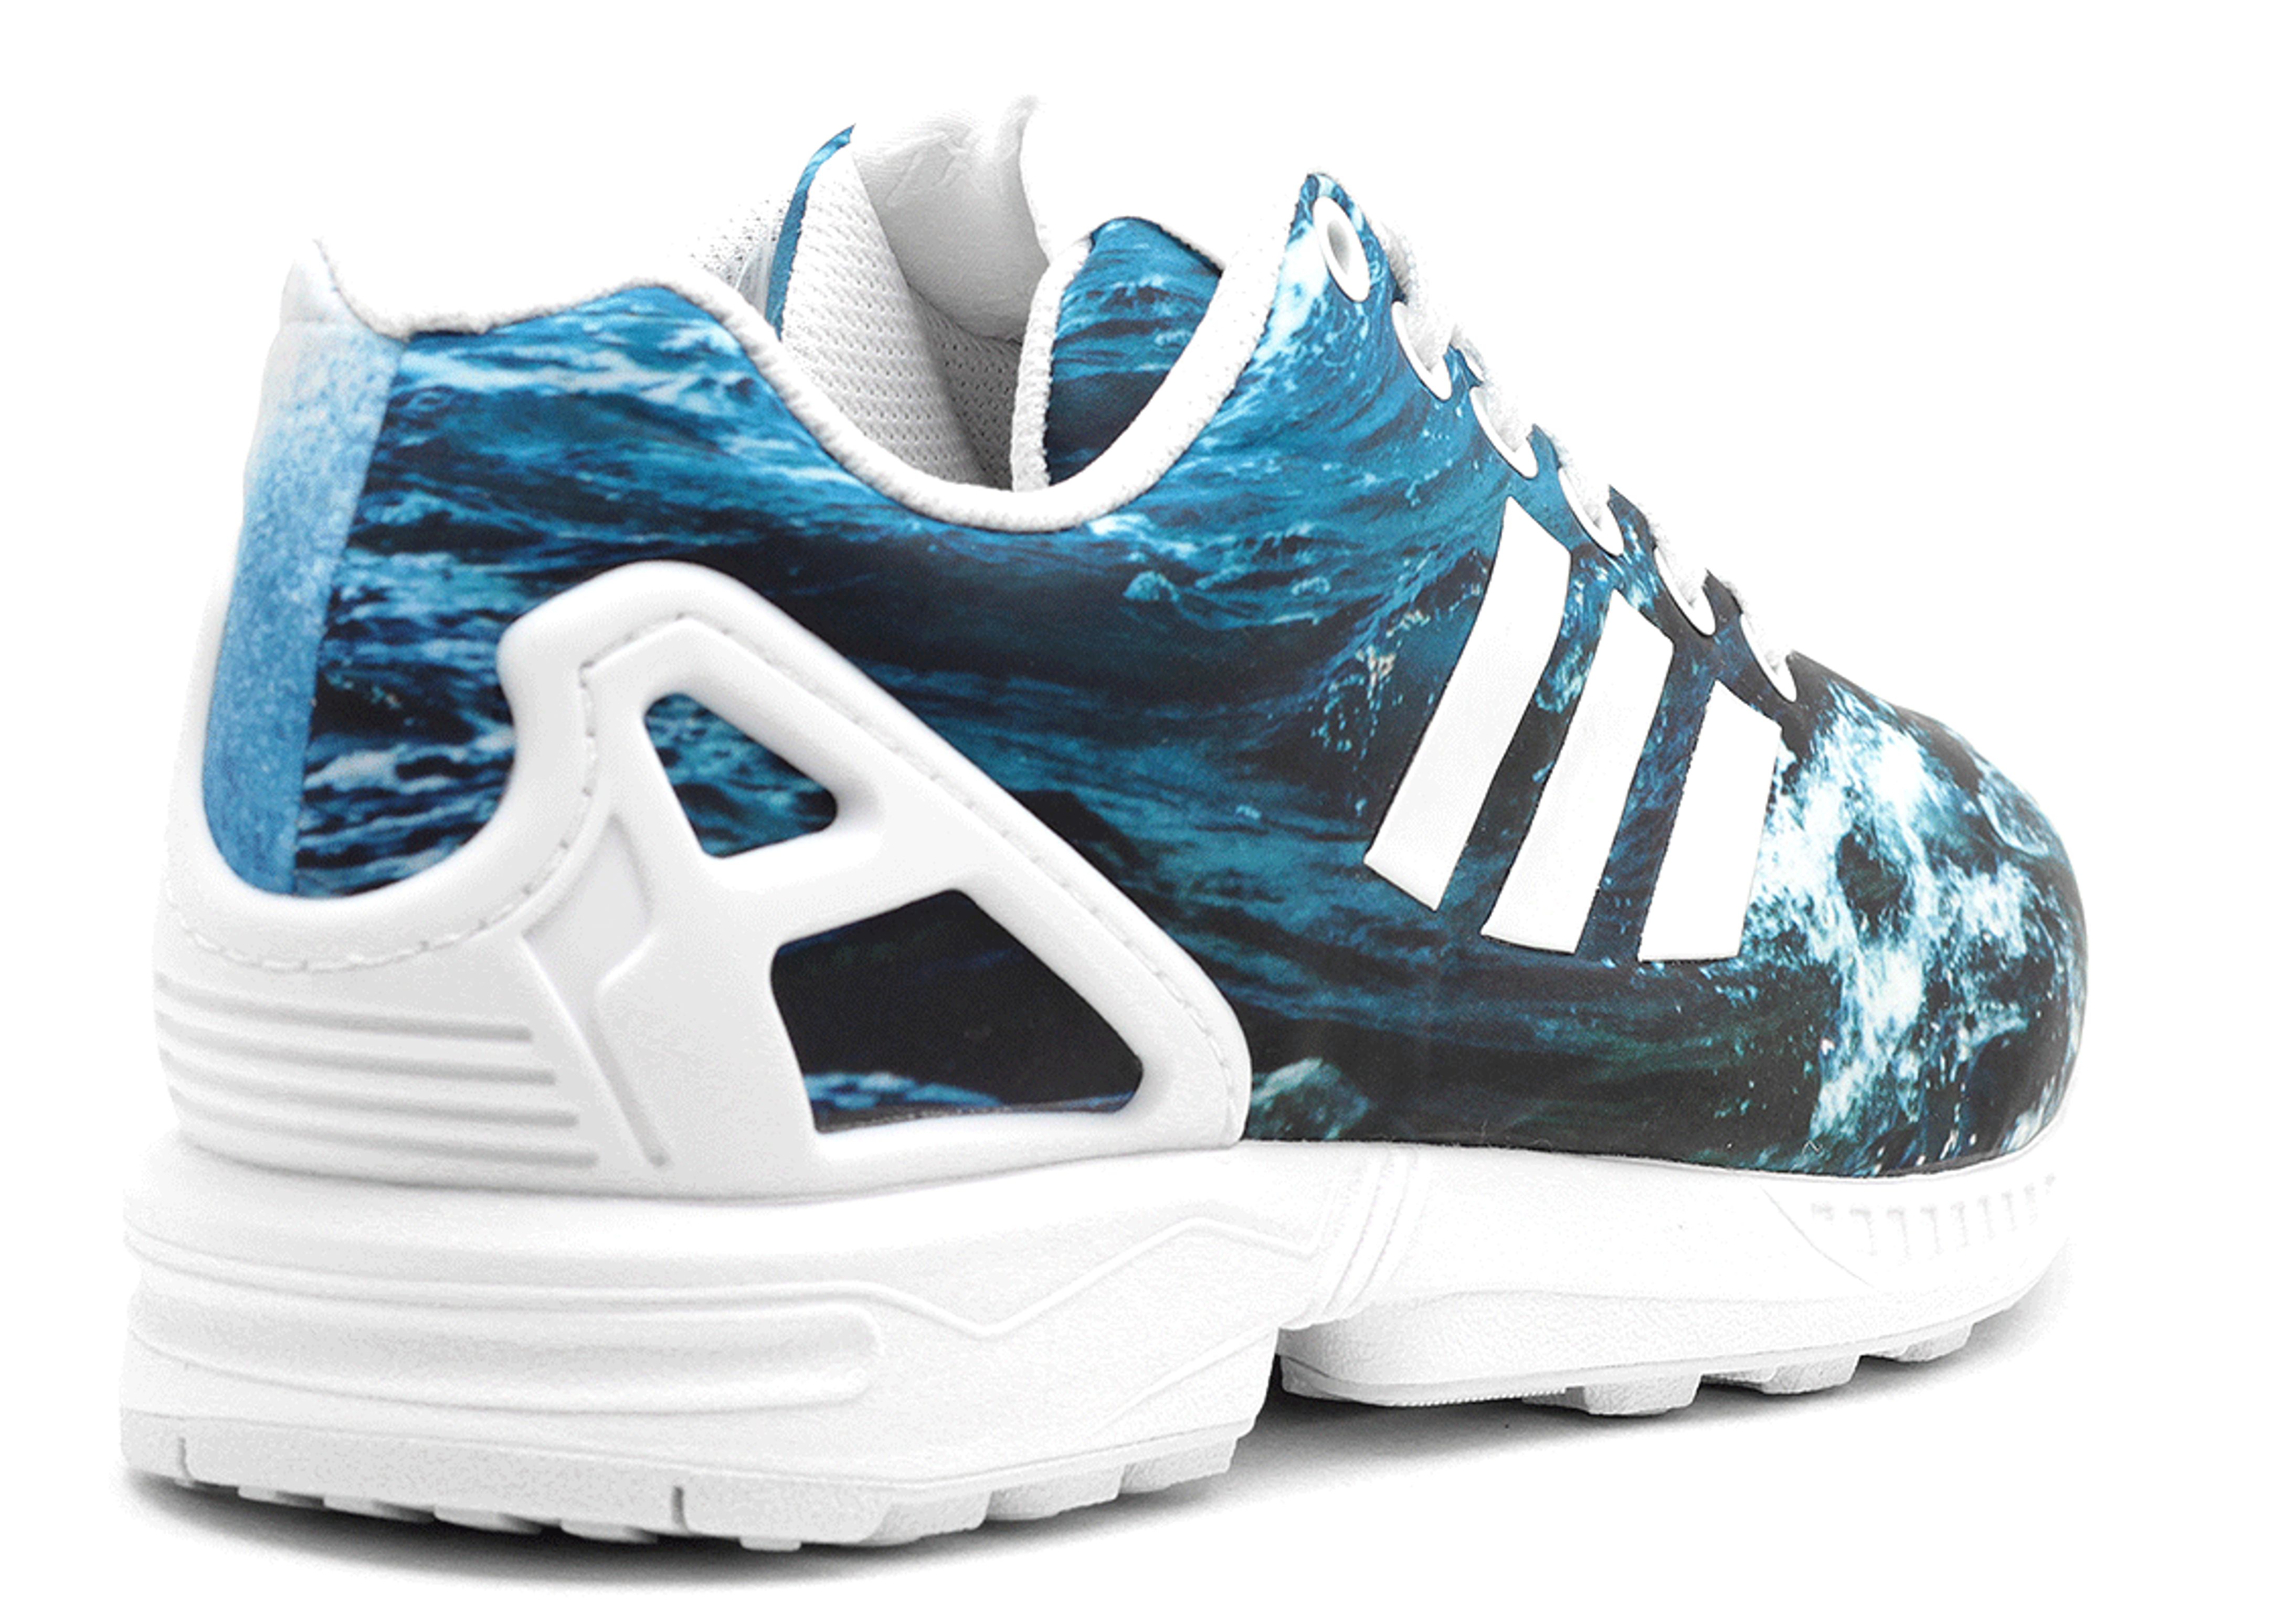 adidas zx flux ocean